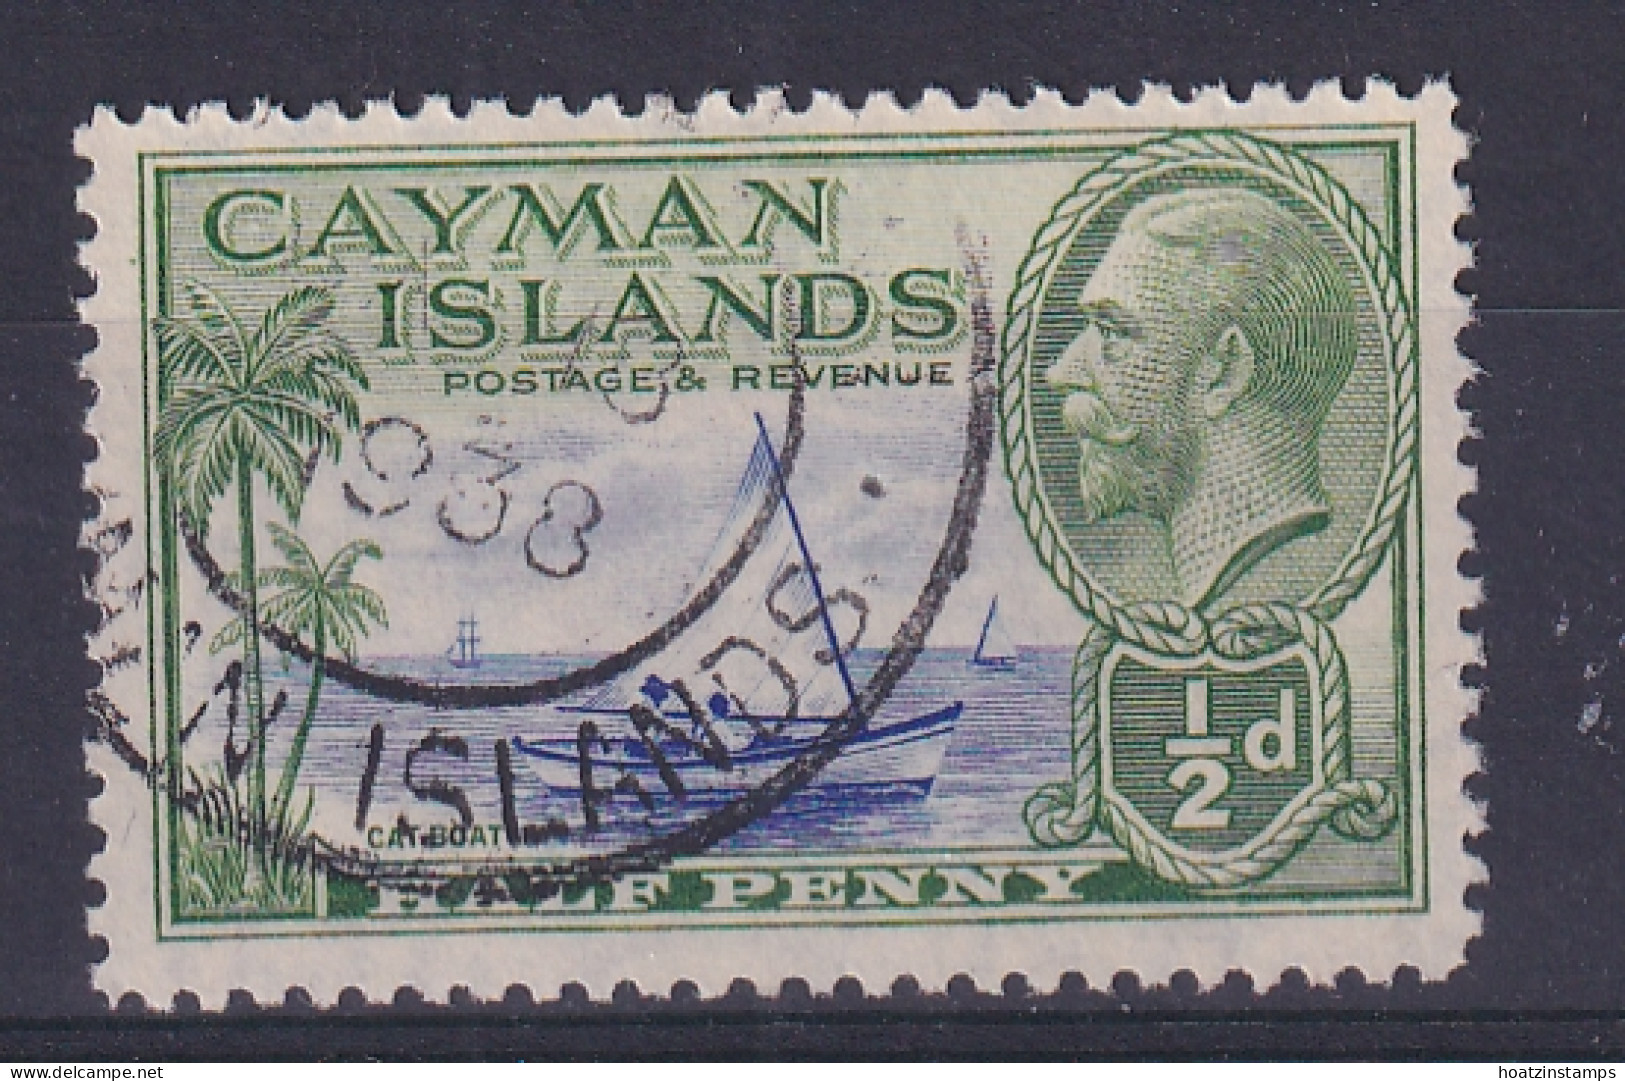 Cayman Islands: 1935   KGV - Pictorial   SG97   ½d     Used - Iles Caïmans